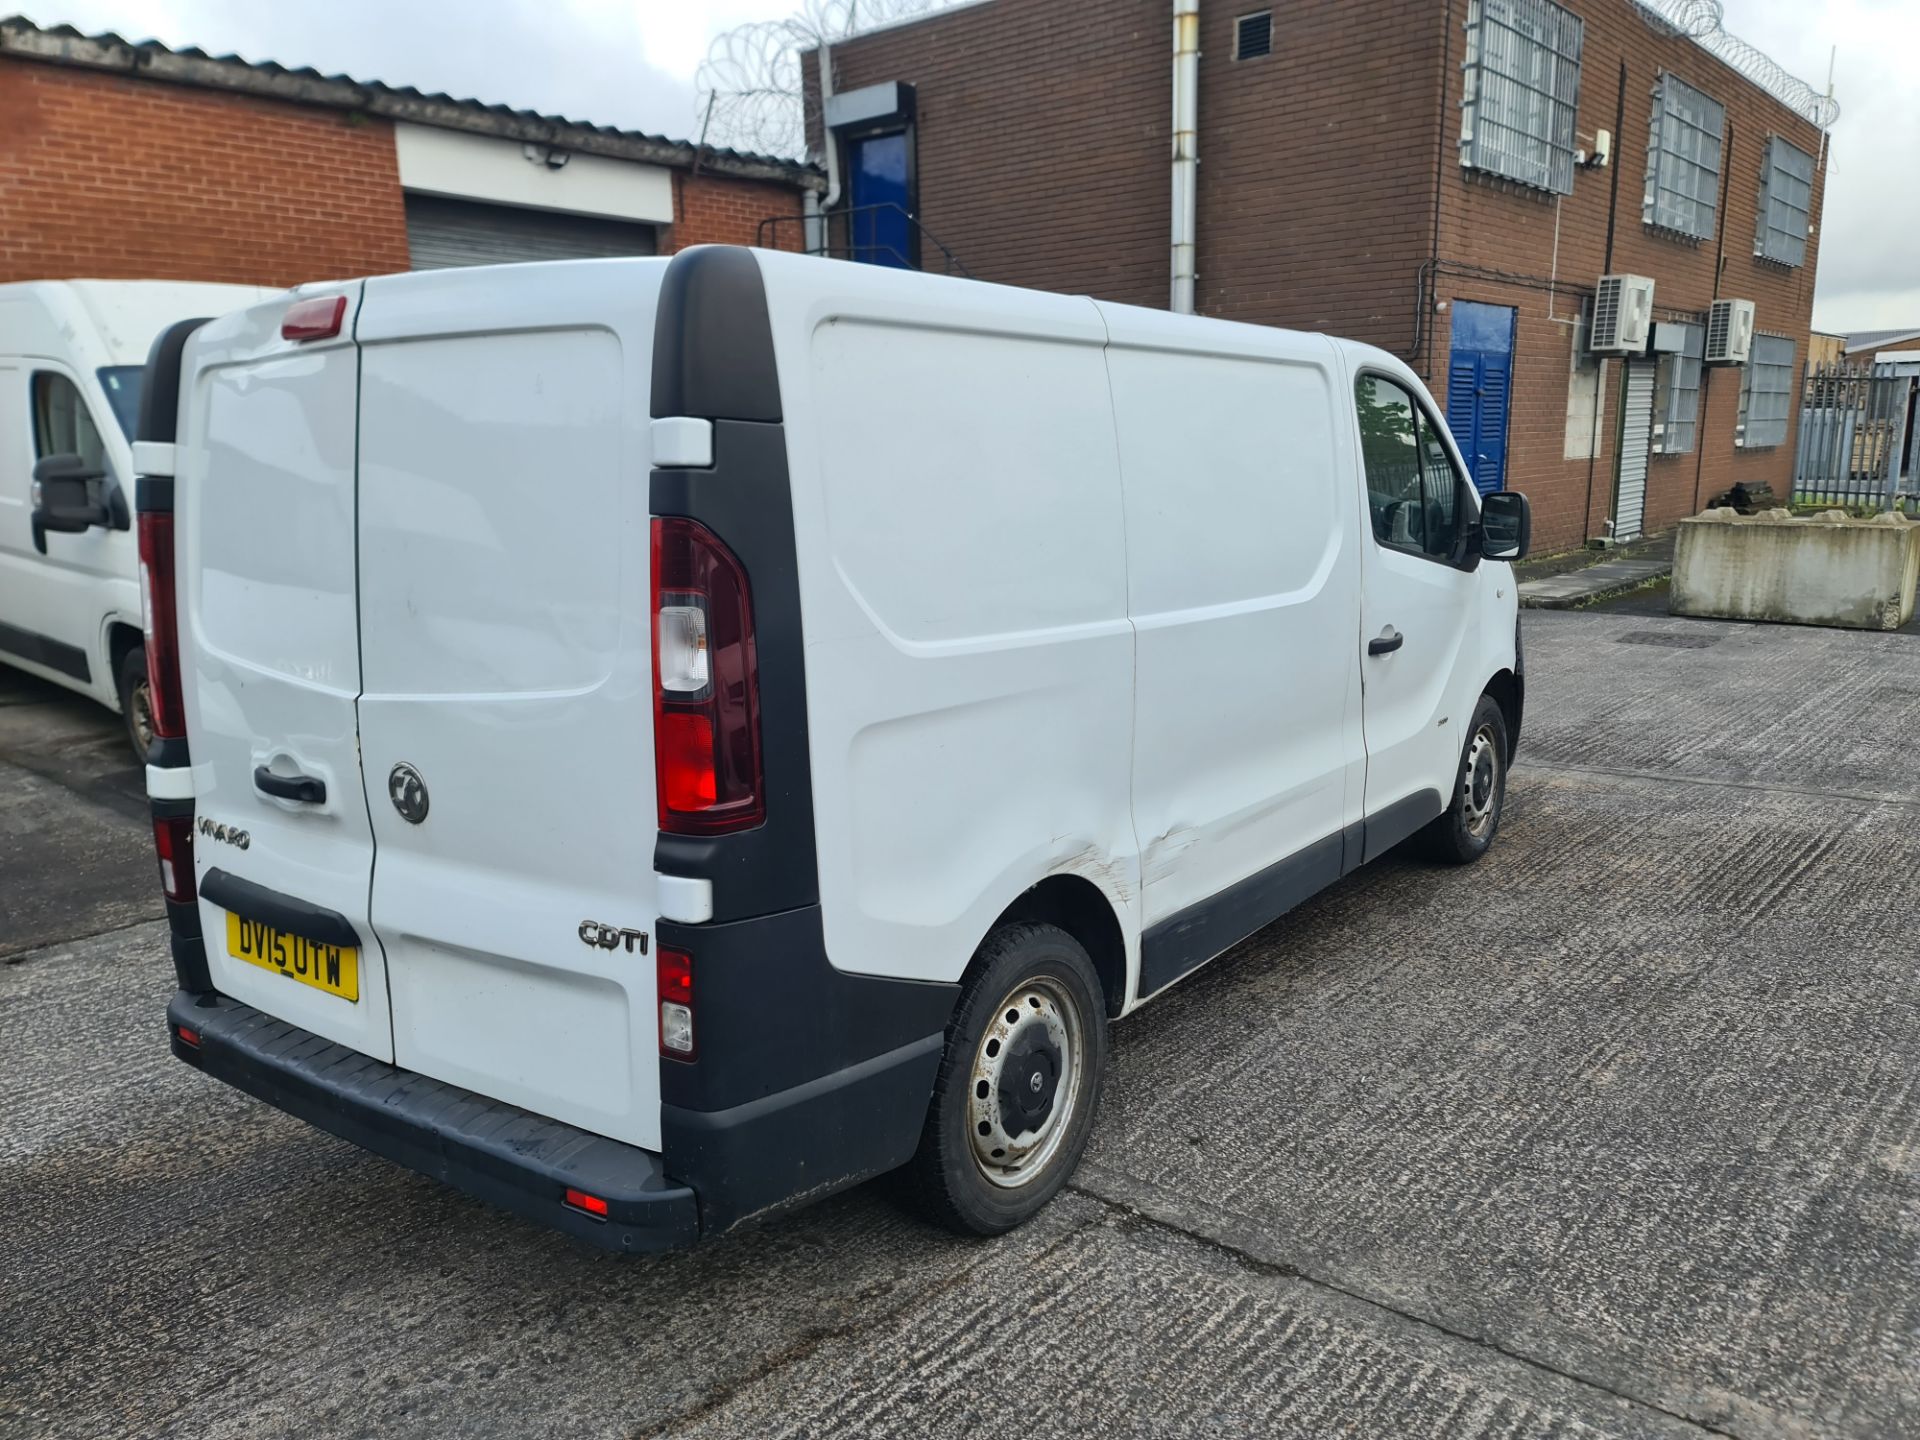 2015 Vauxhall Vivaro 2900 CDTi panel van - Image 3 of 81